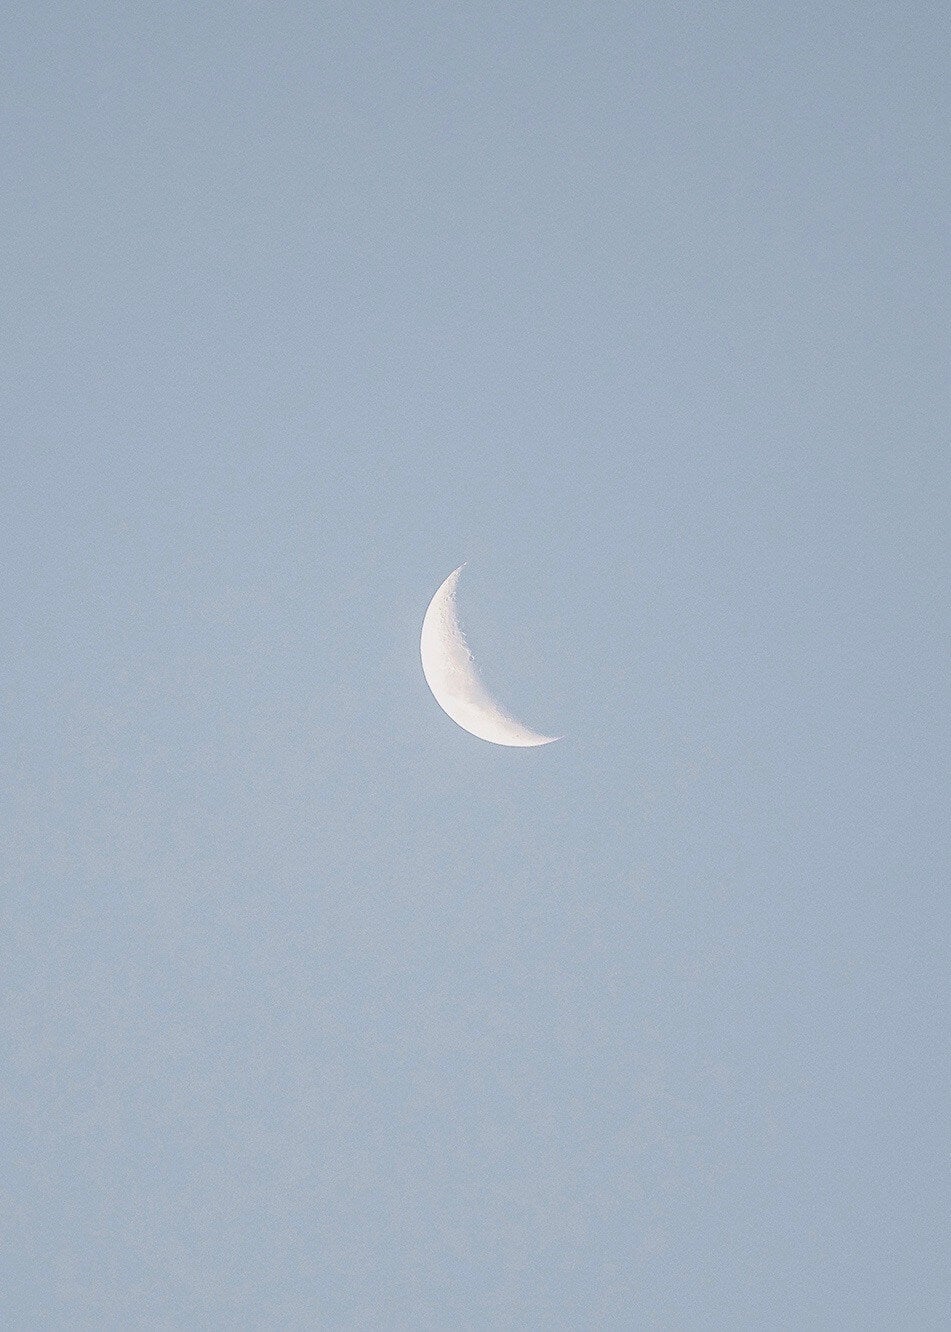 Emilie Ristevski photo of crescent moon